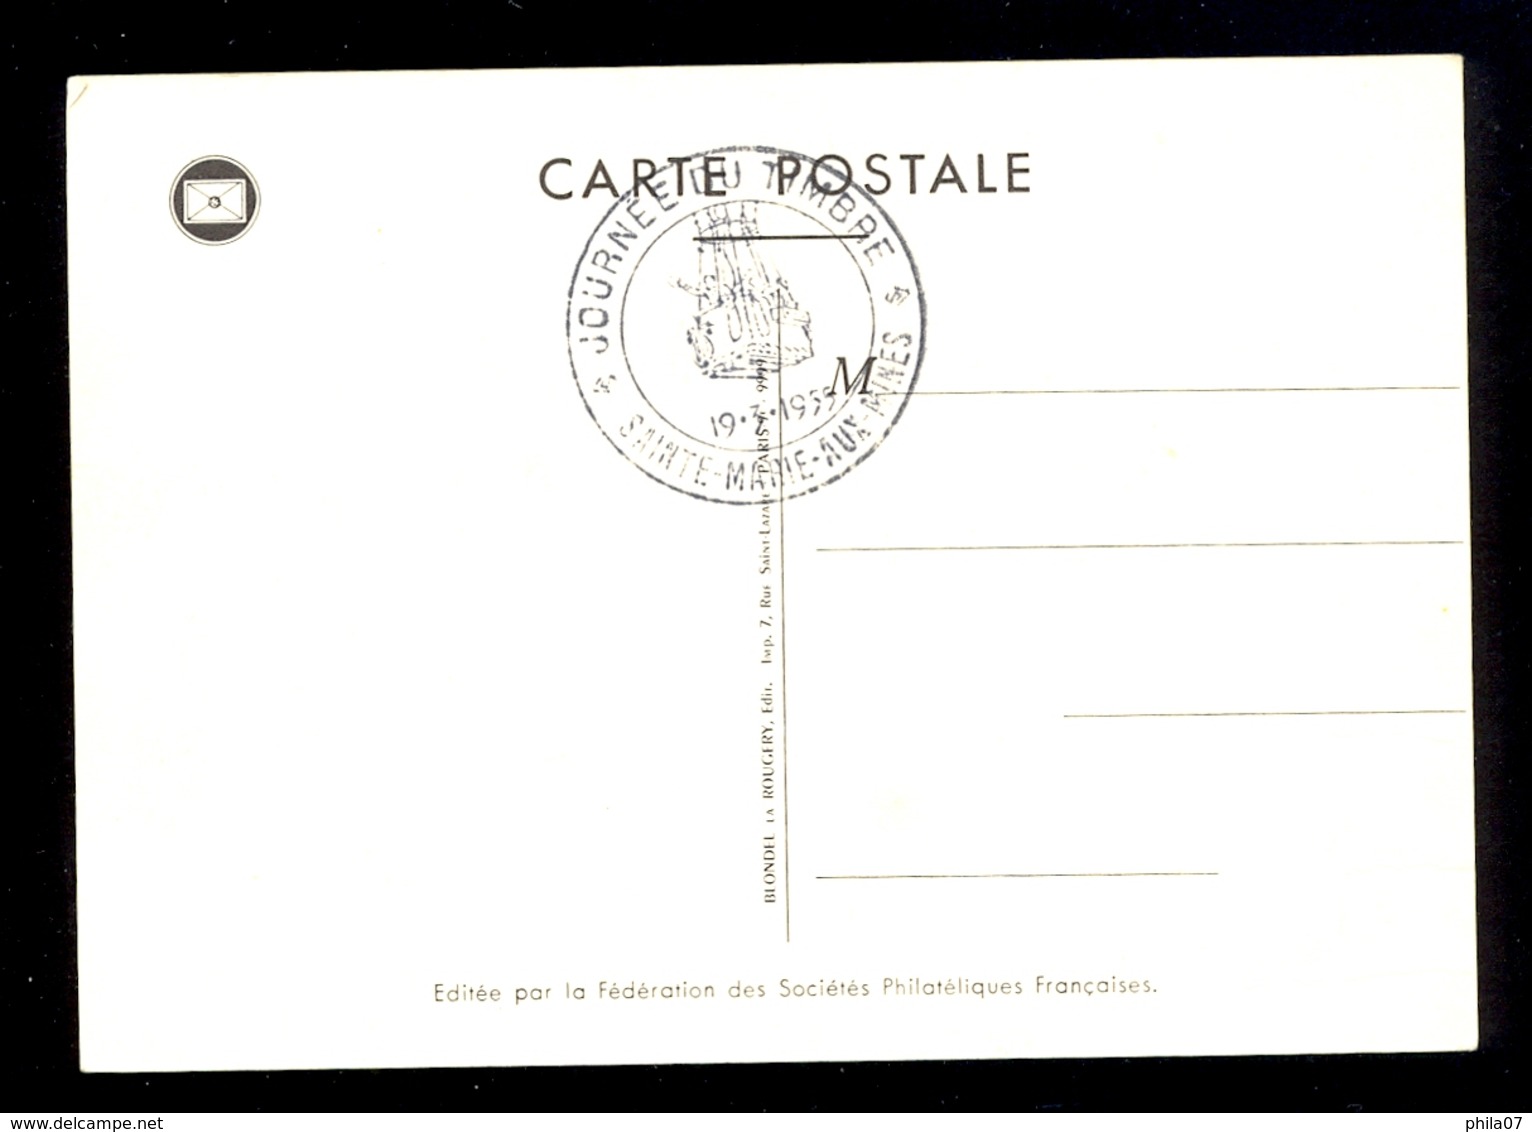 Postcard Ballon Mail - Nice Stamp And Cancel On Postcard 'La Poste Par Ballon 1870-71' / 2 Scans - Other (Air)